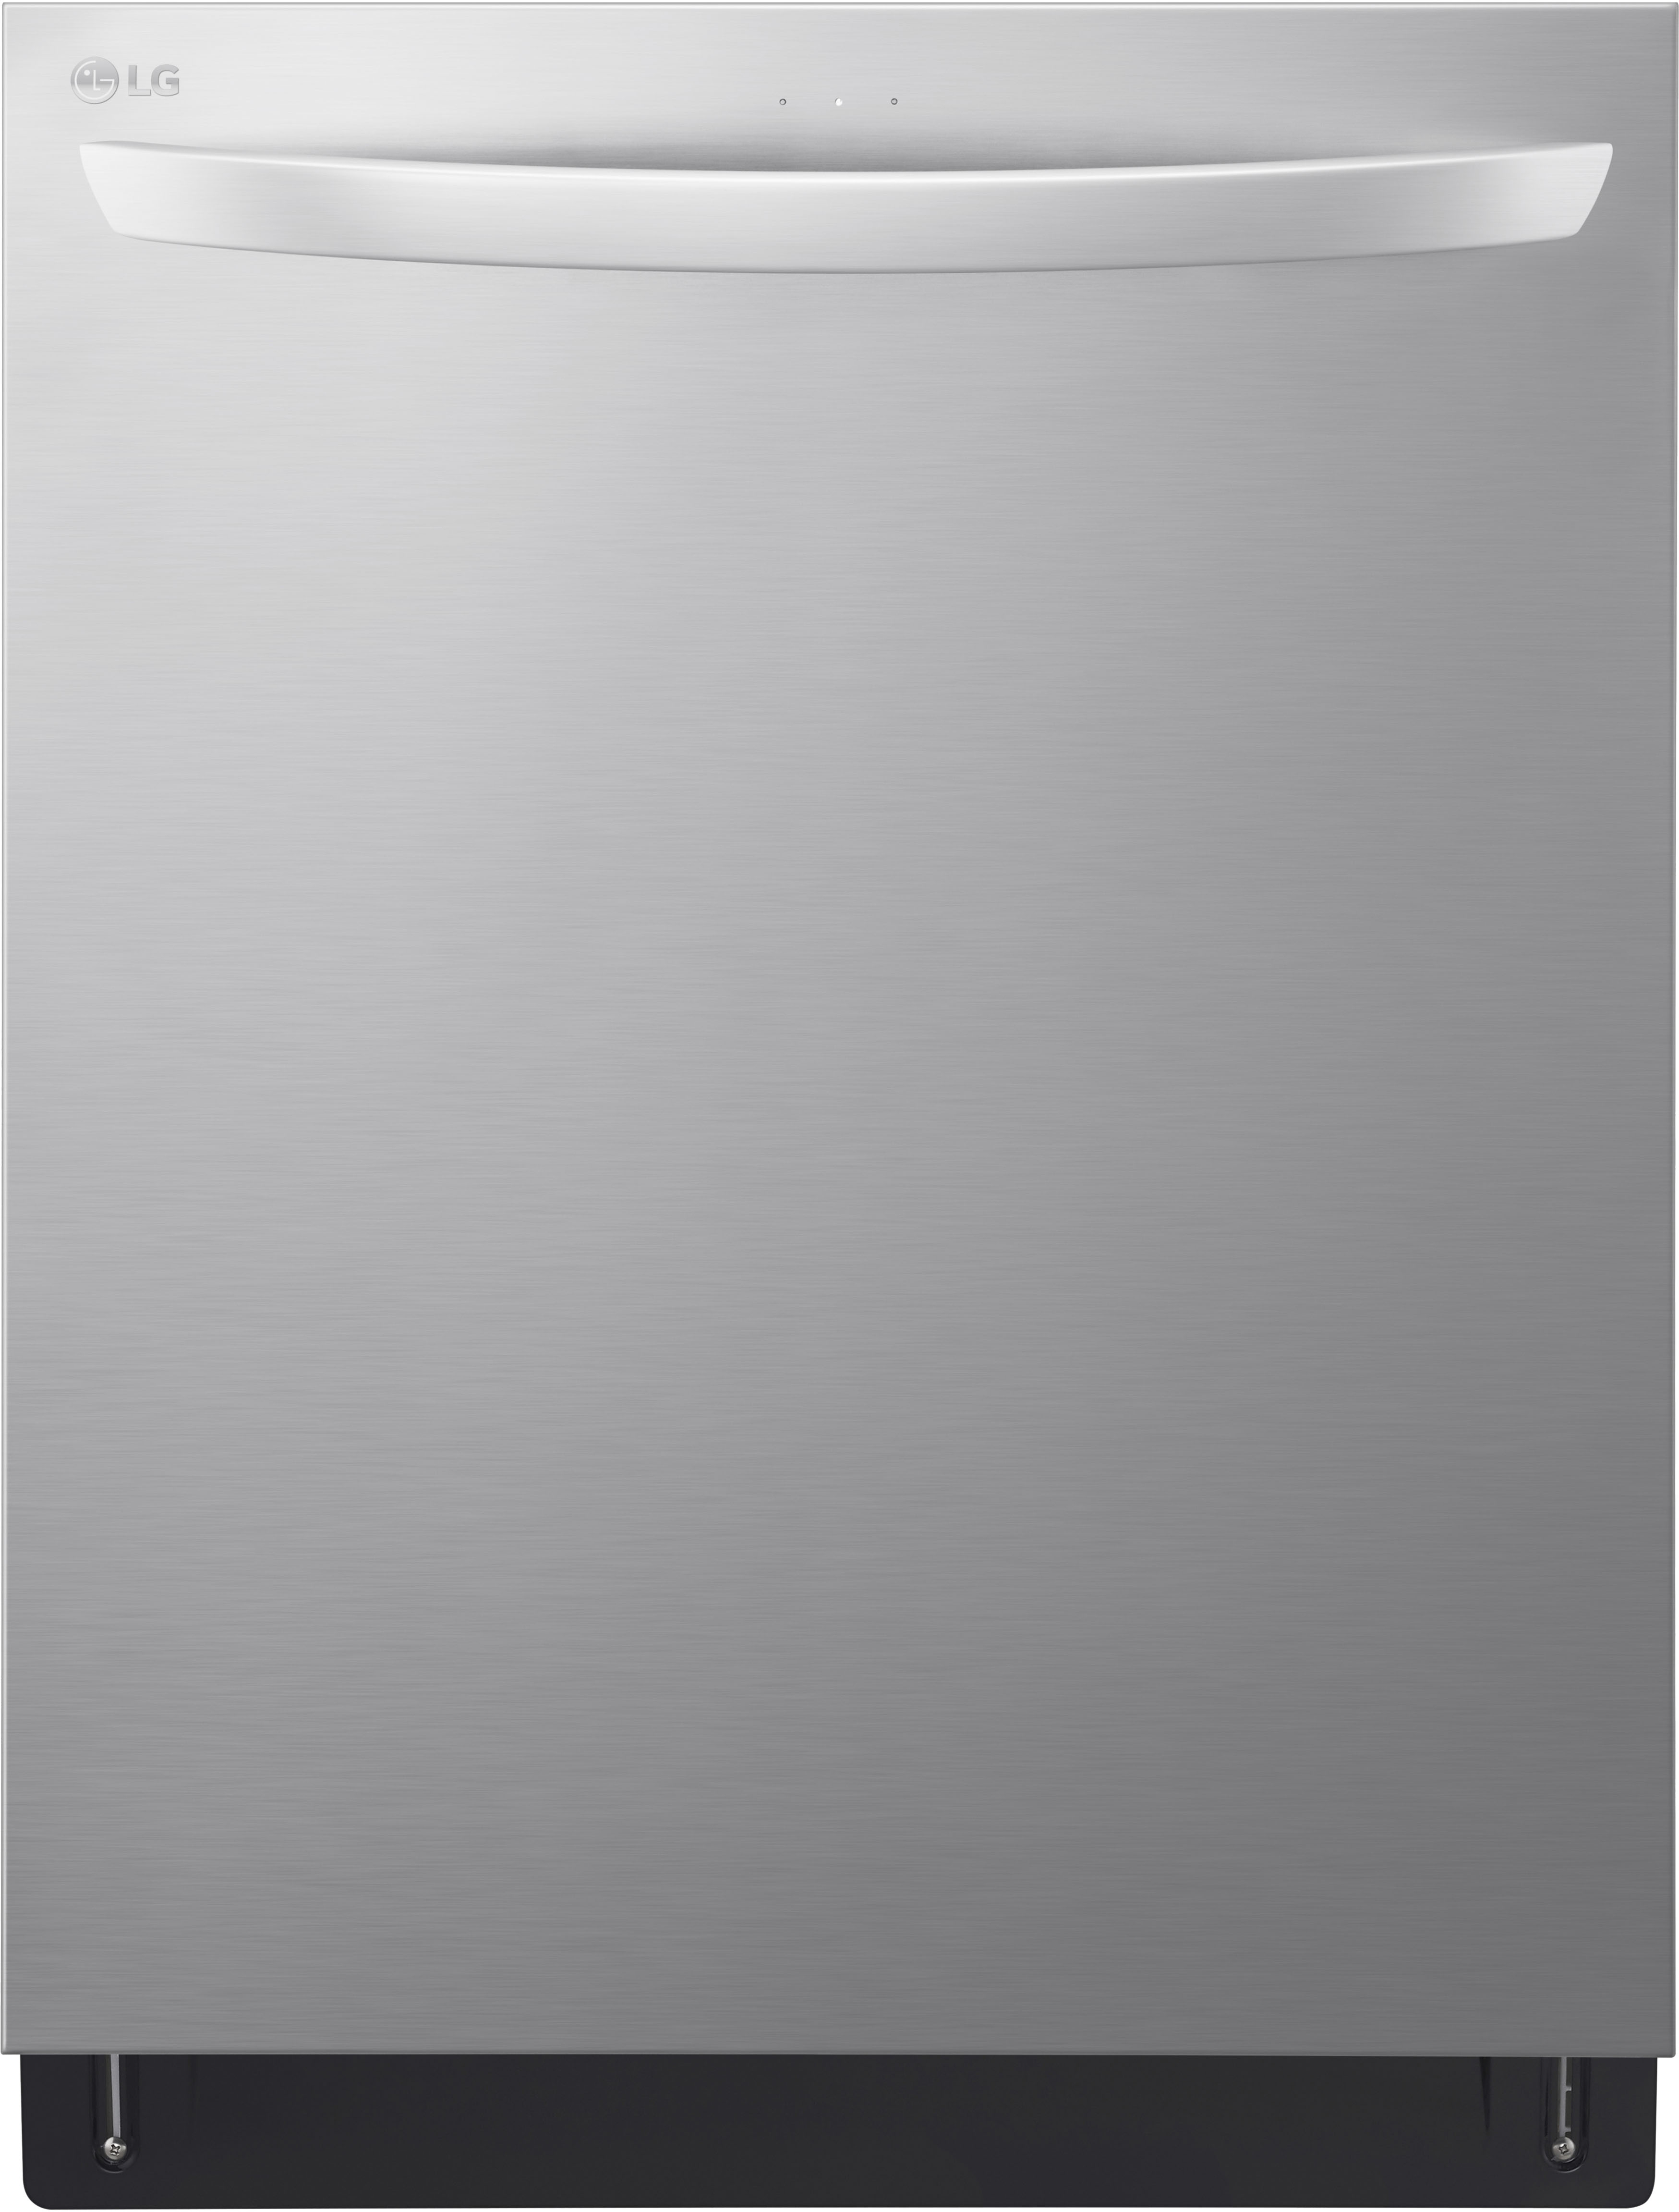 Product Image of the LG Dishwasher With QuadWash